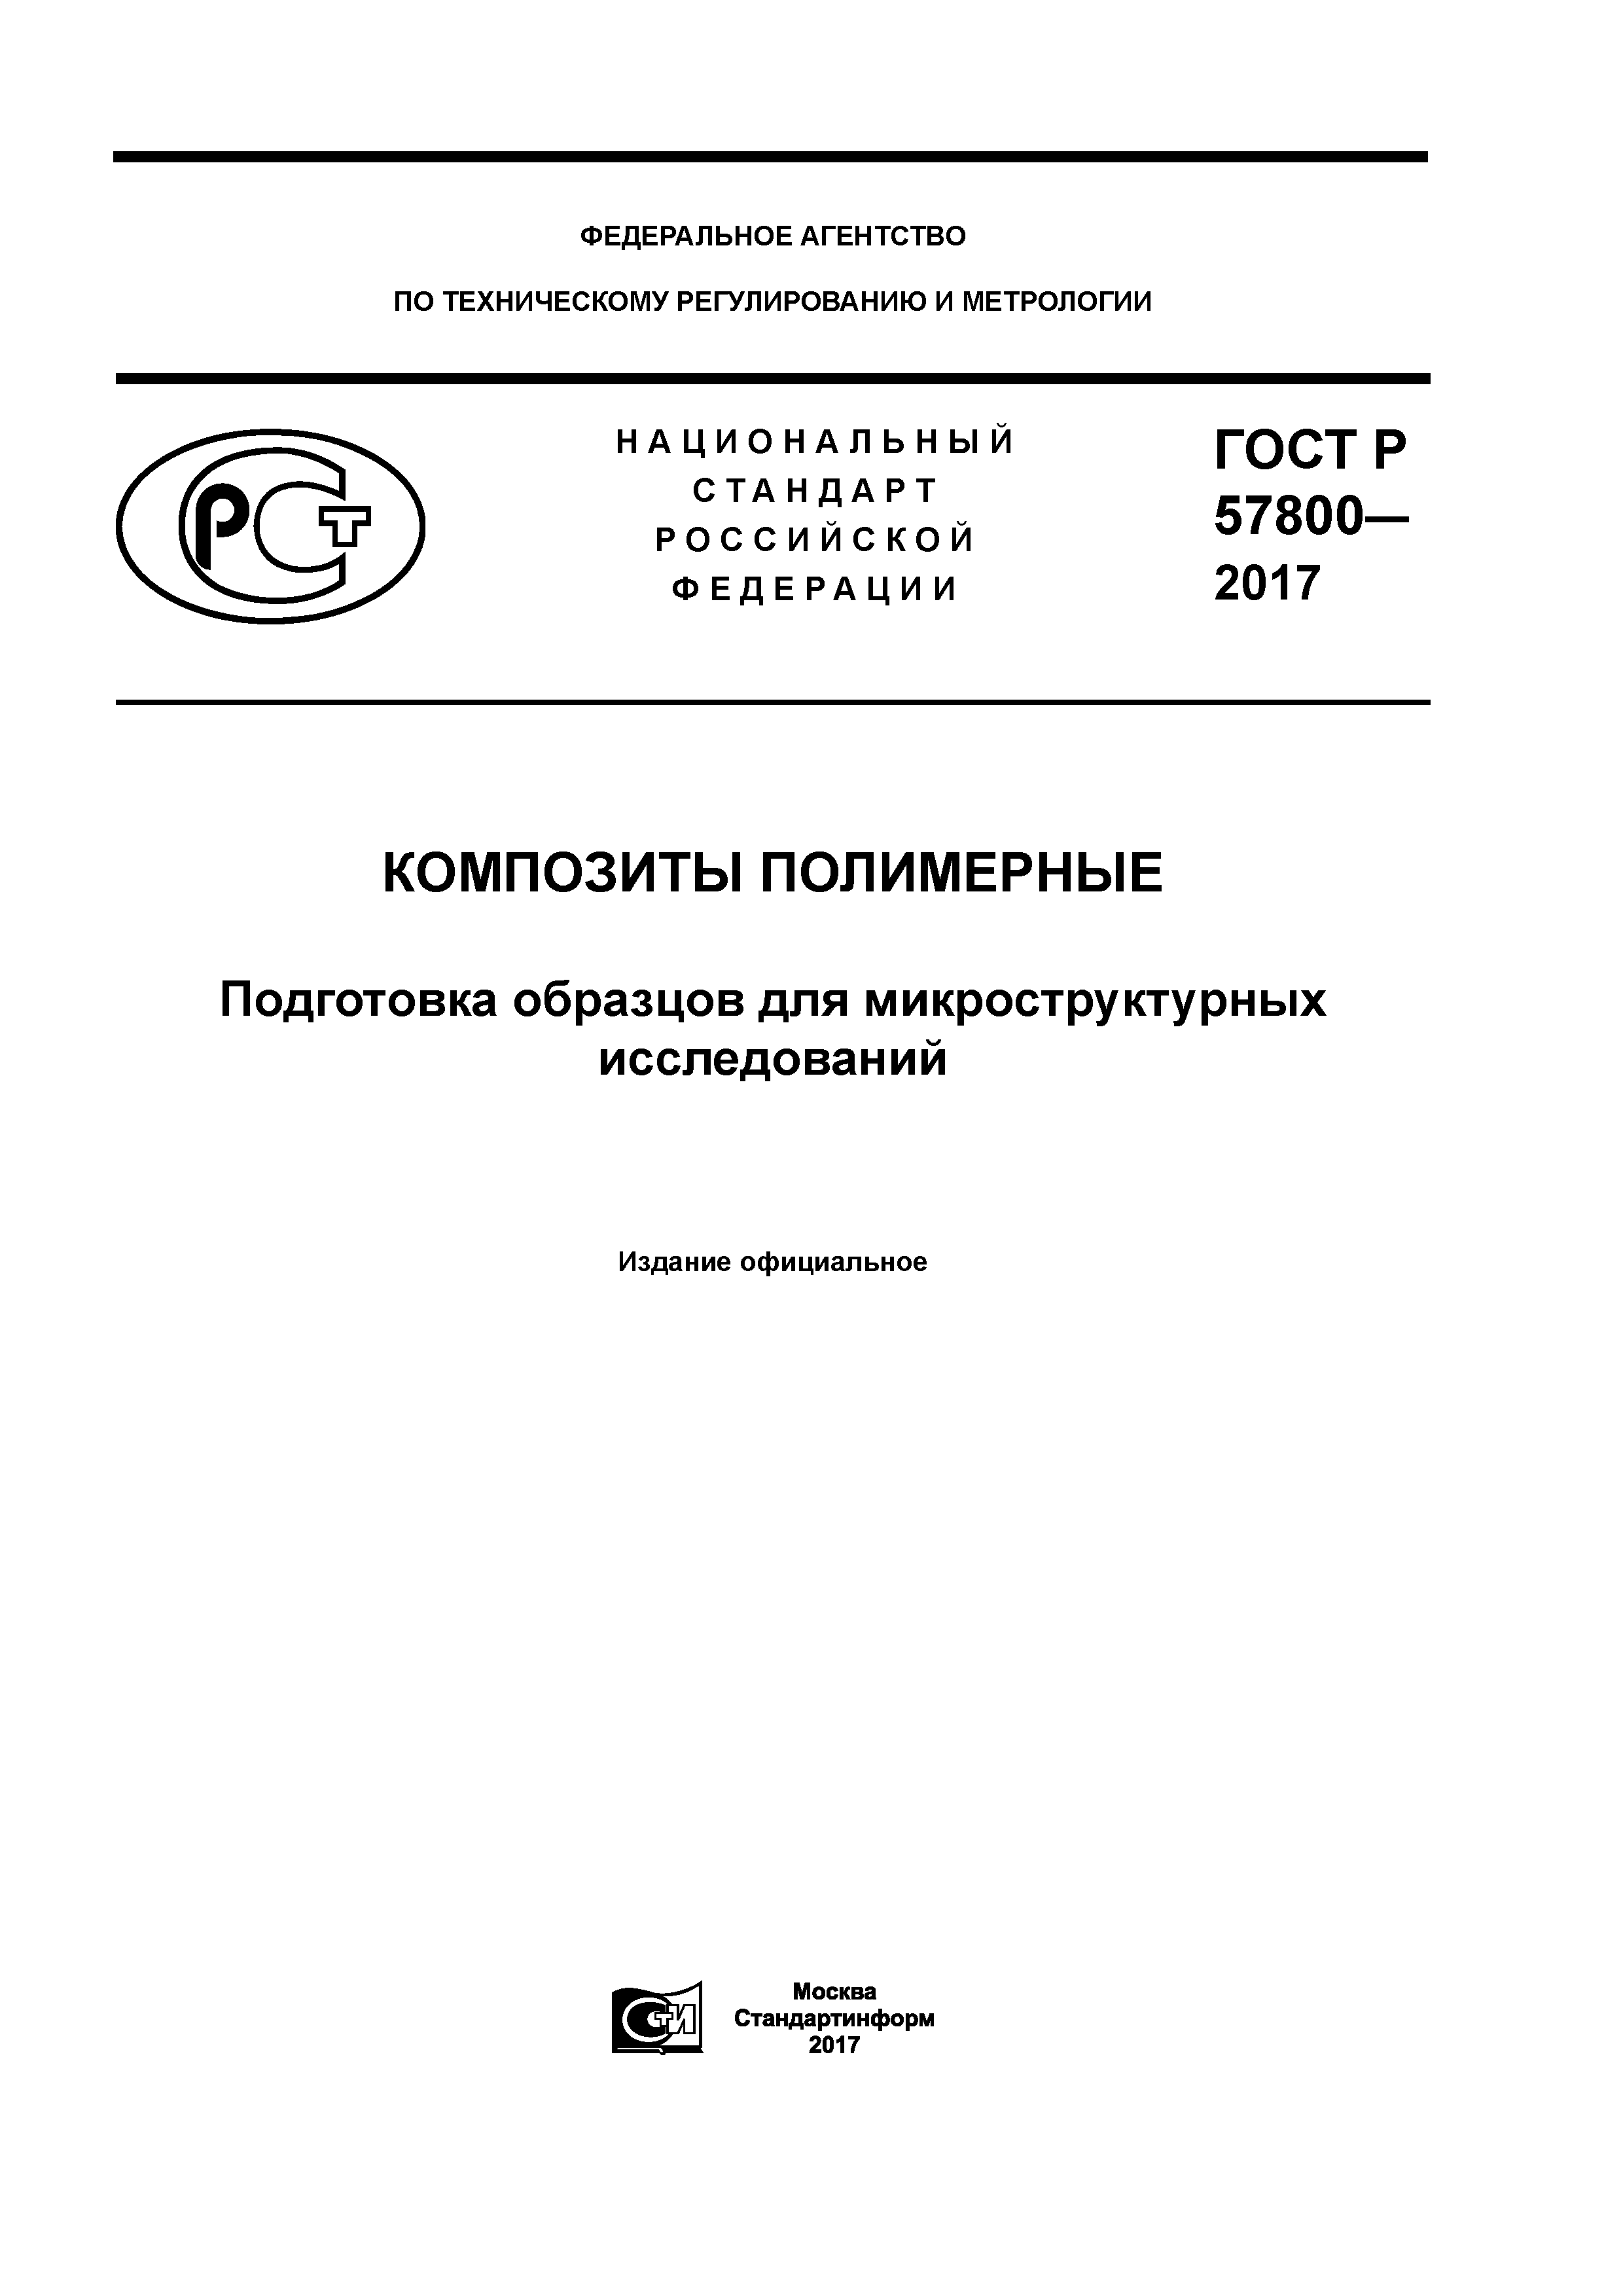 ГОСТ Р 57800-2017